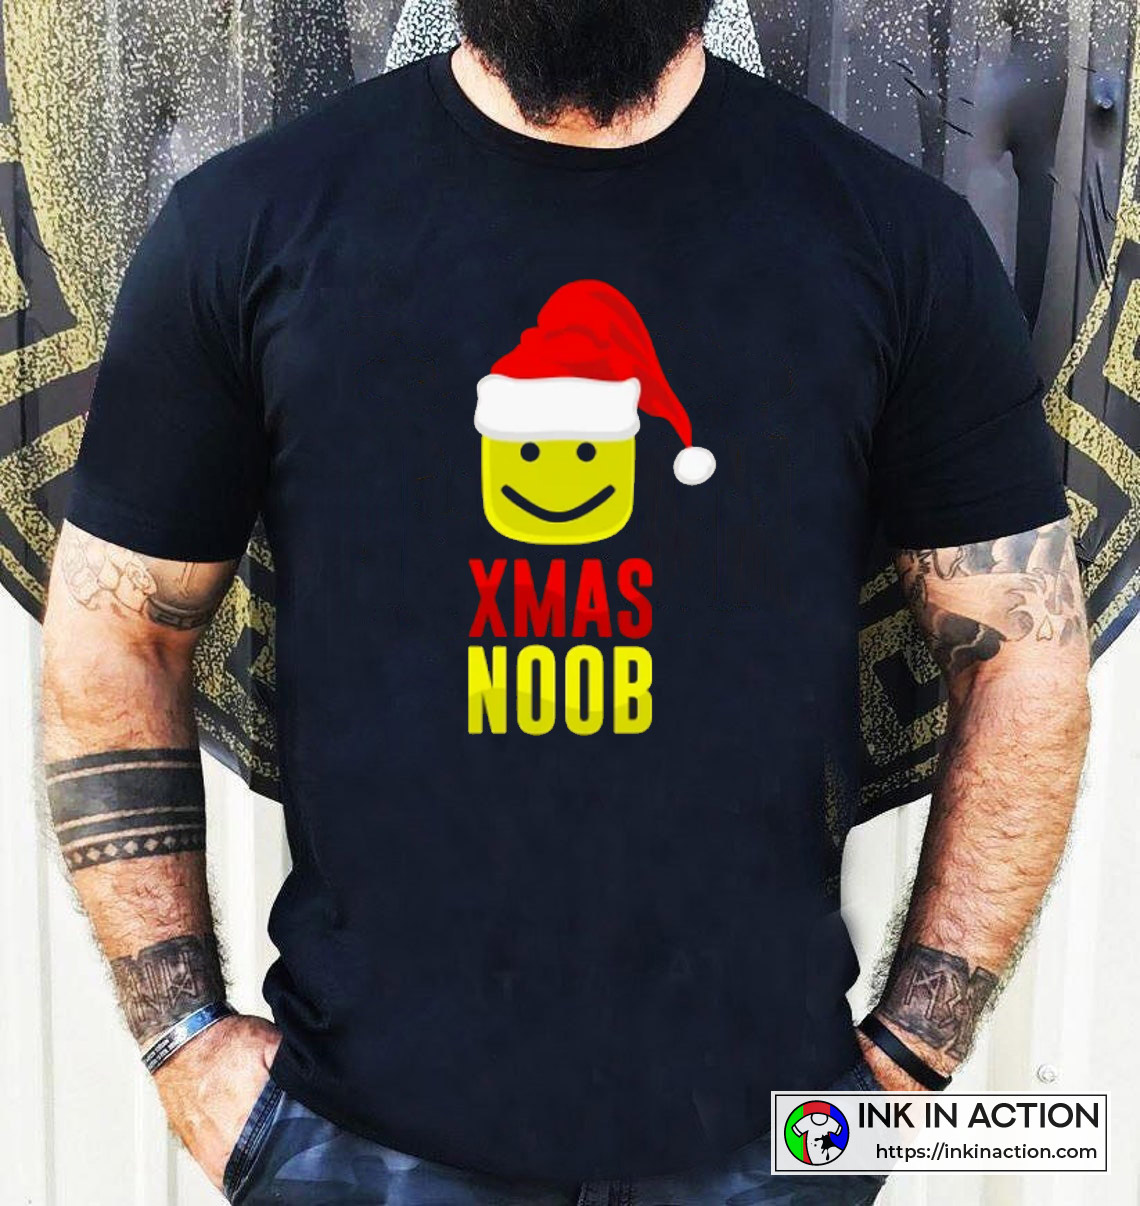 noob T-shirt  Roblox shirt, Hoodie roblox, Roblox t shirts